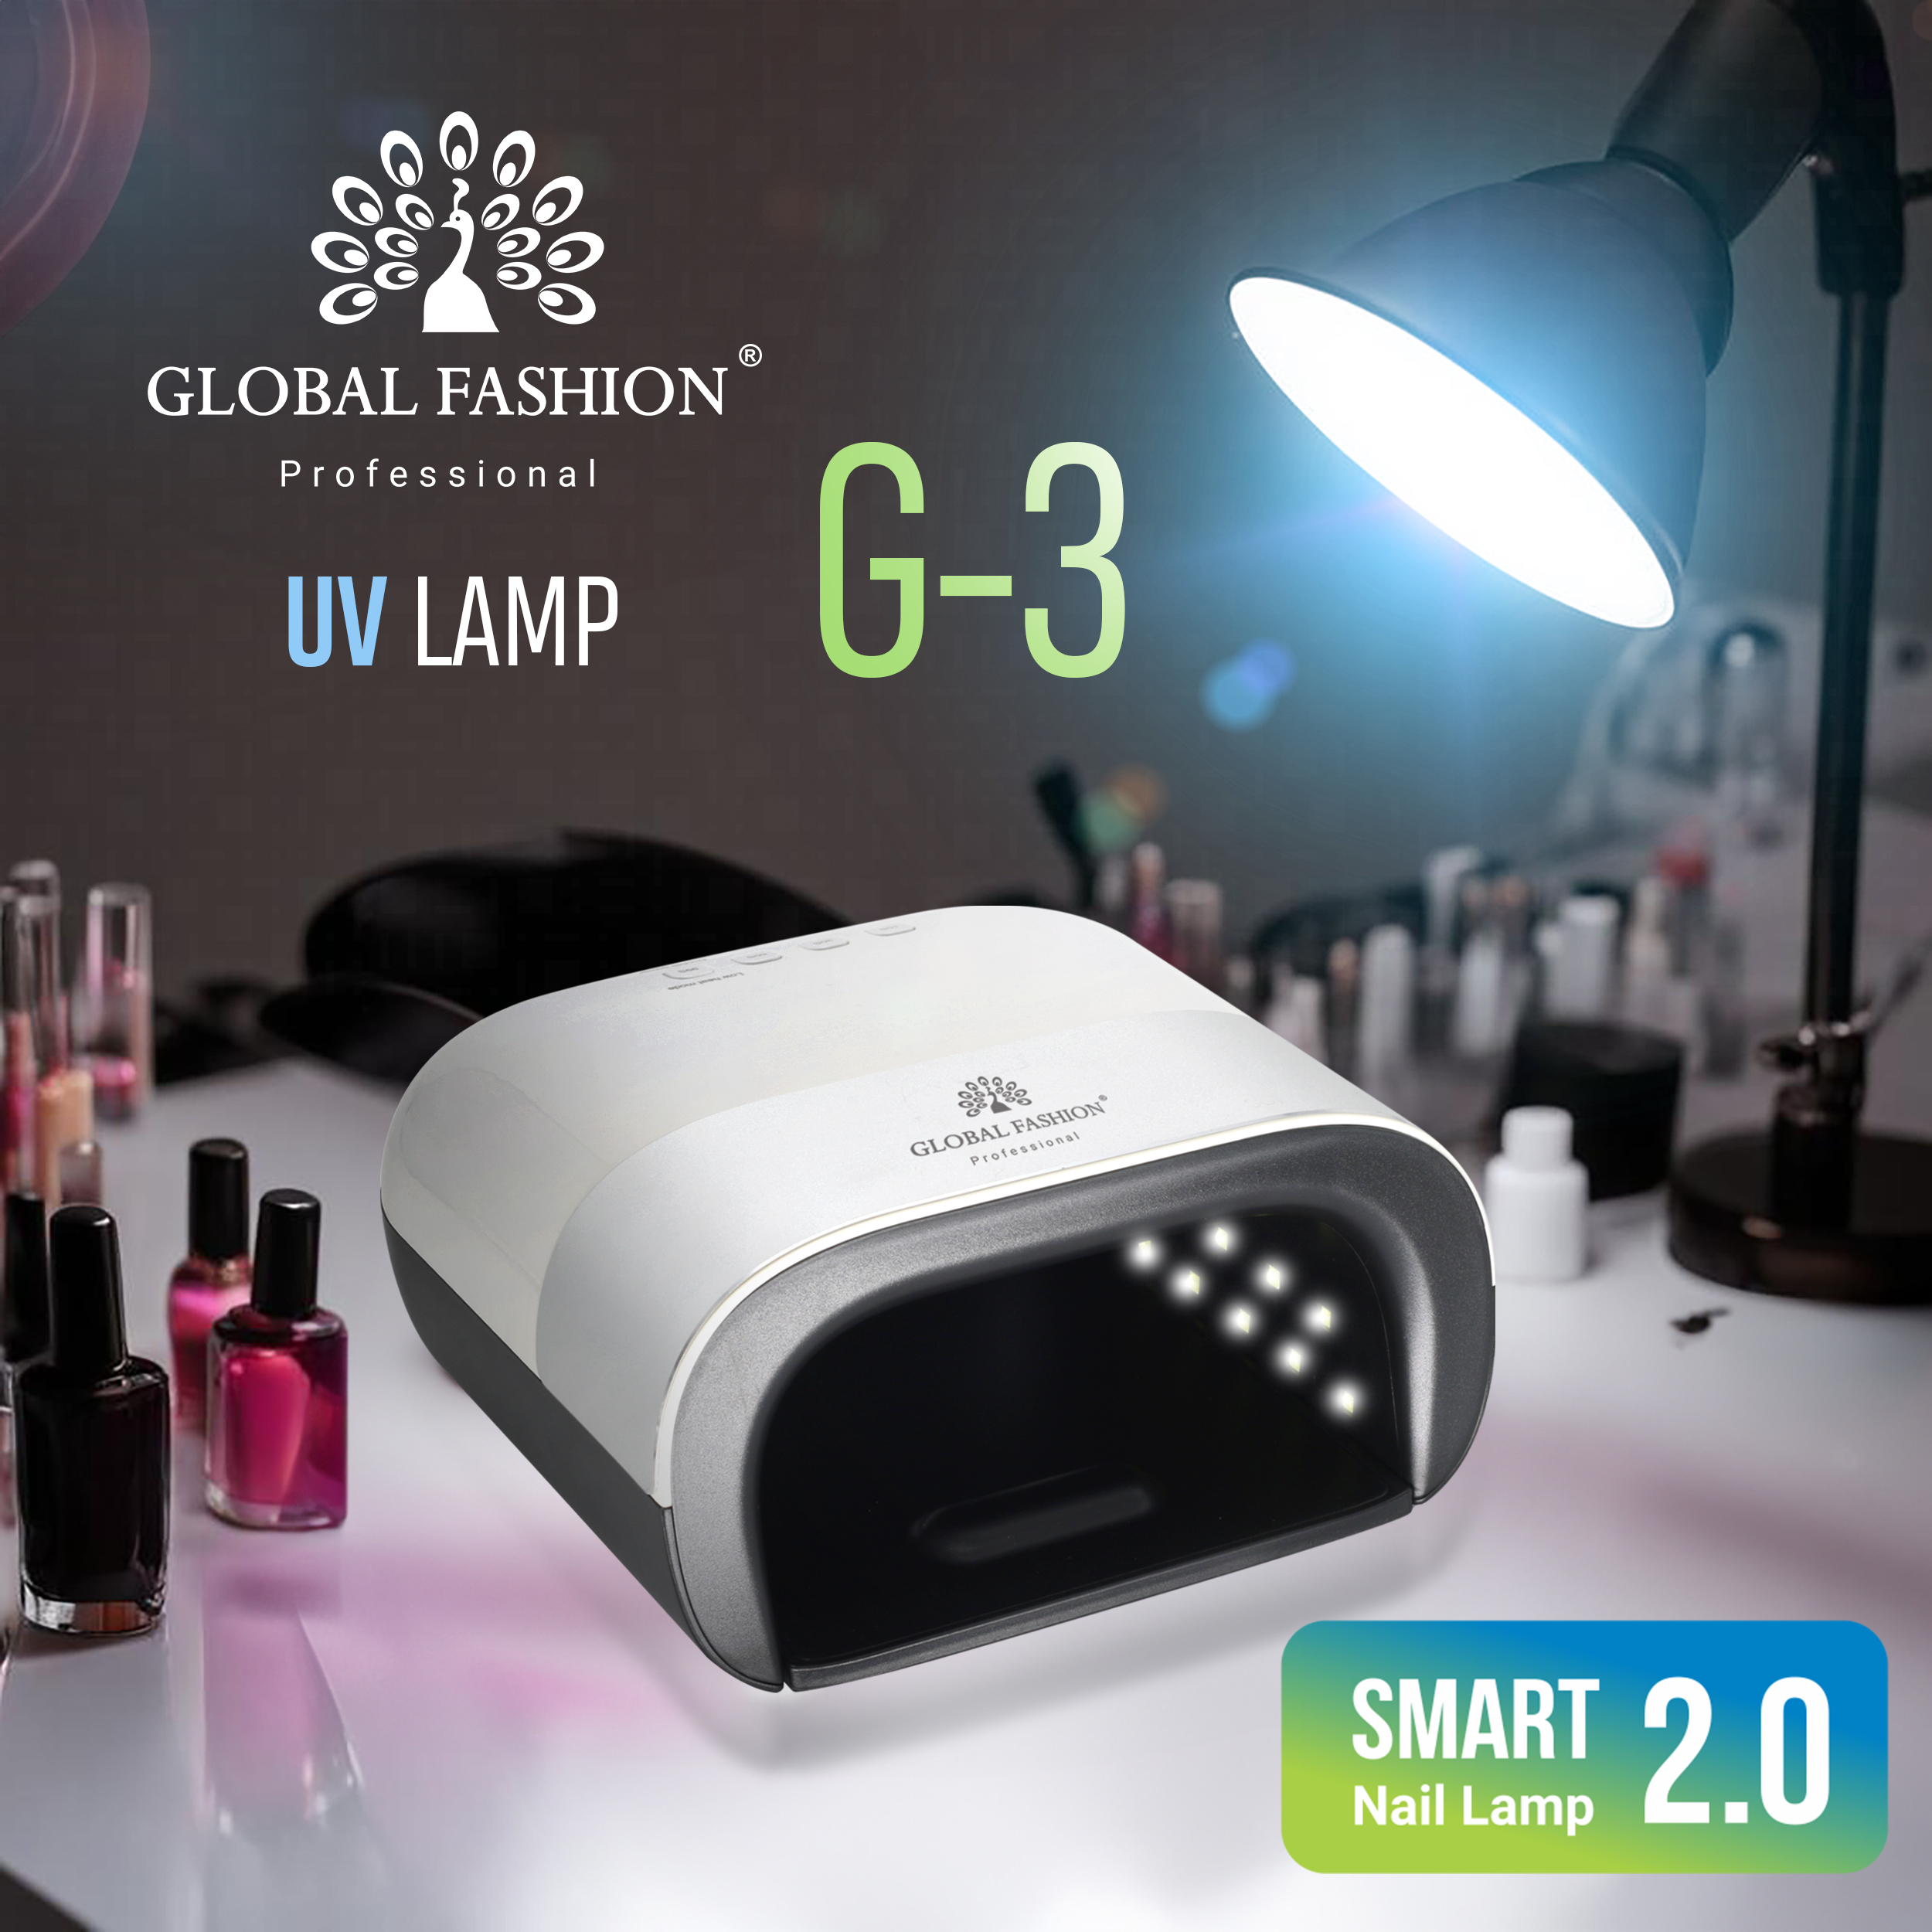 Lampa unghii UV LED profesionala cu timer si senzori 48W G-3 Global Fashion: produs de calitate inovator